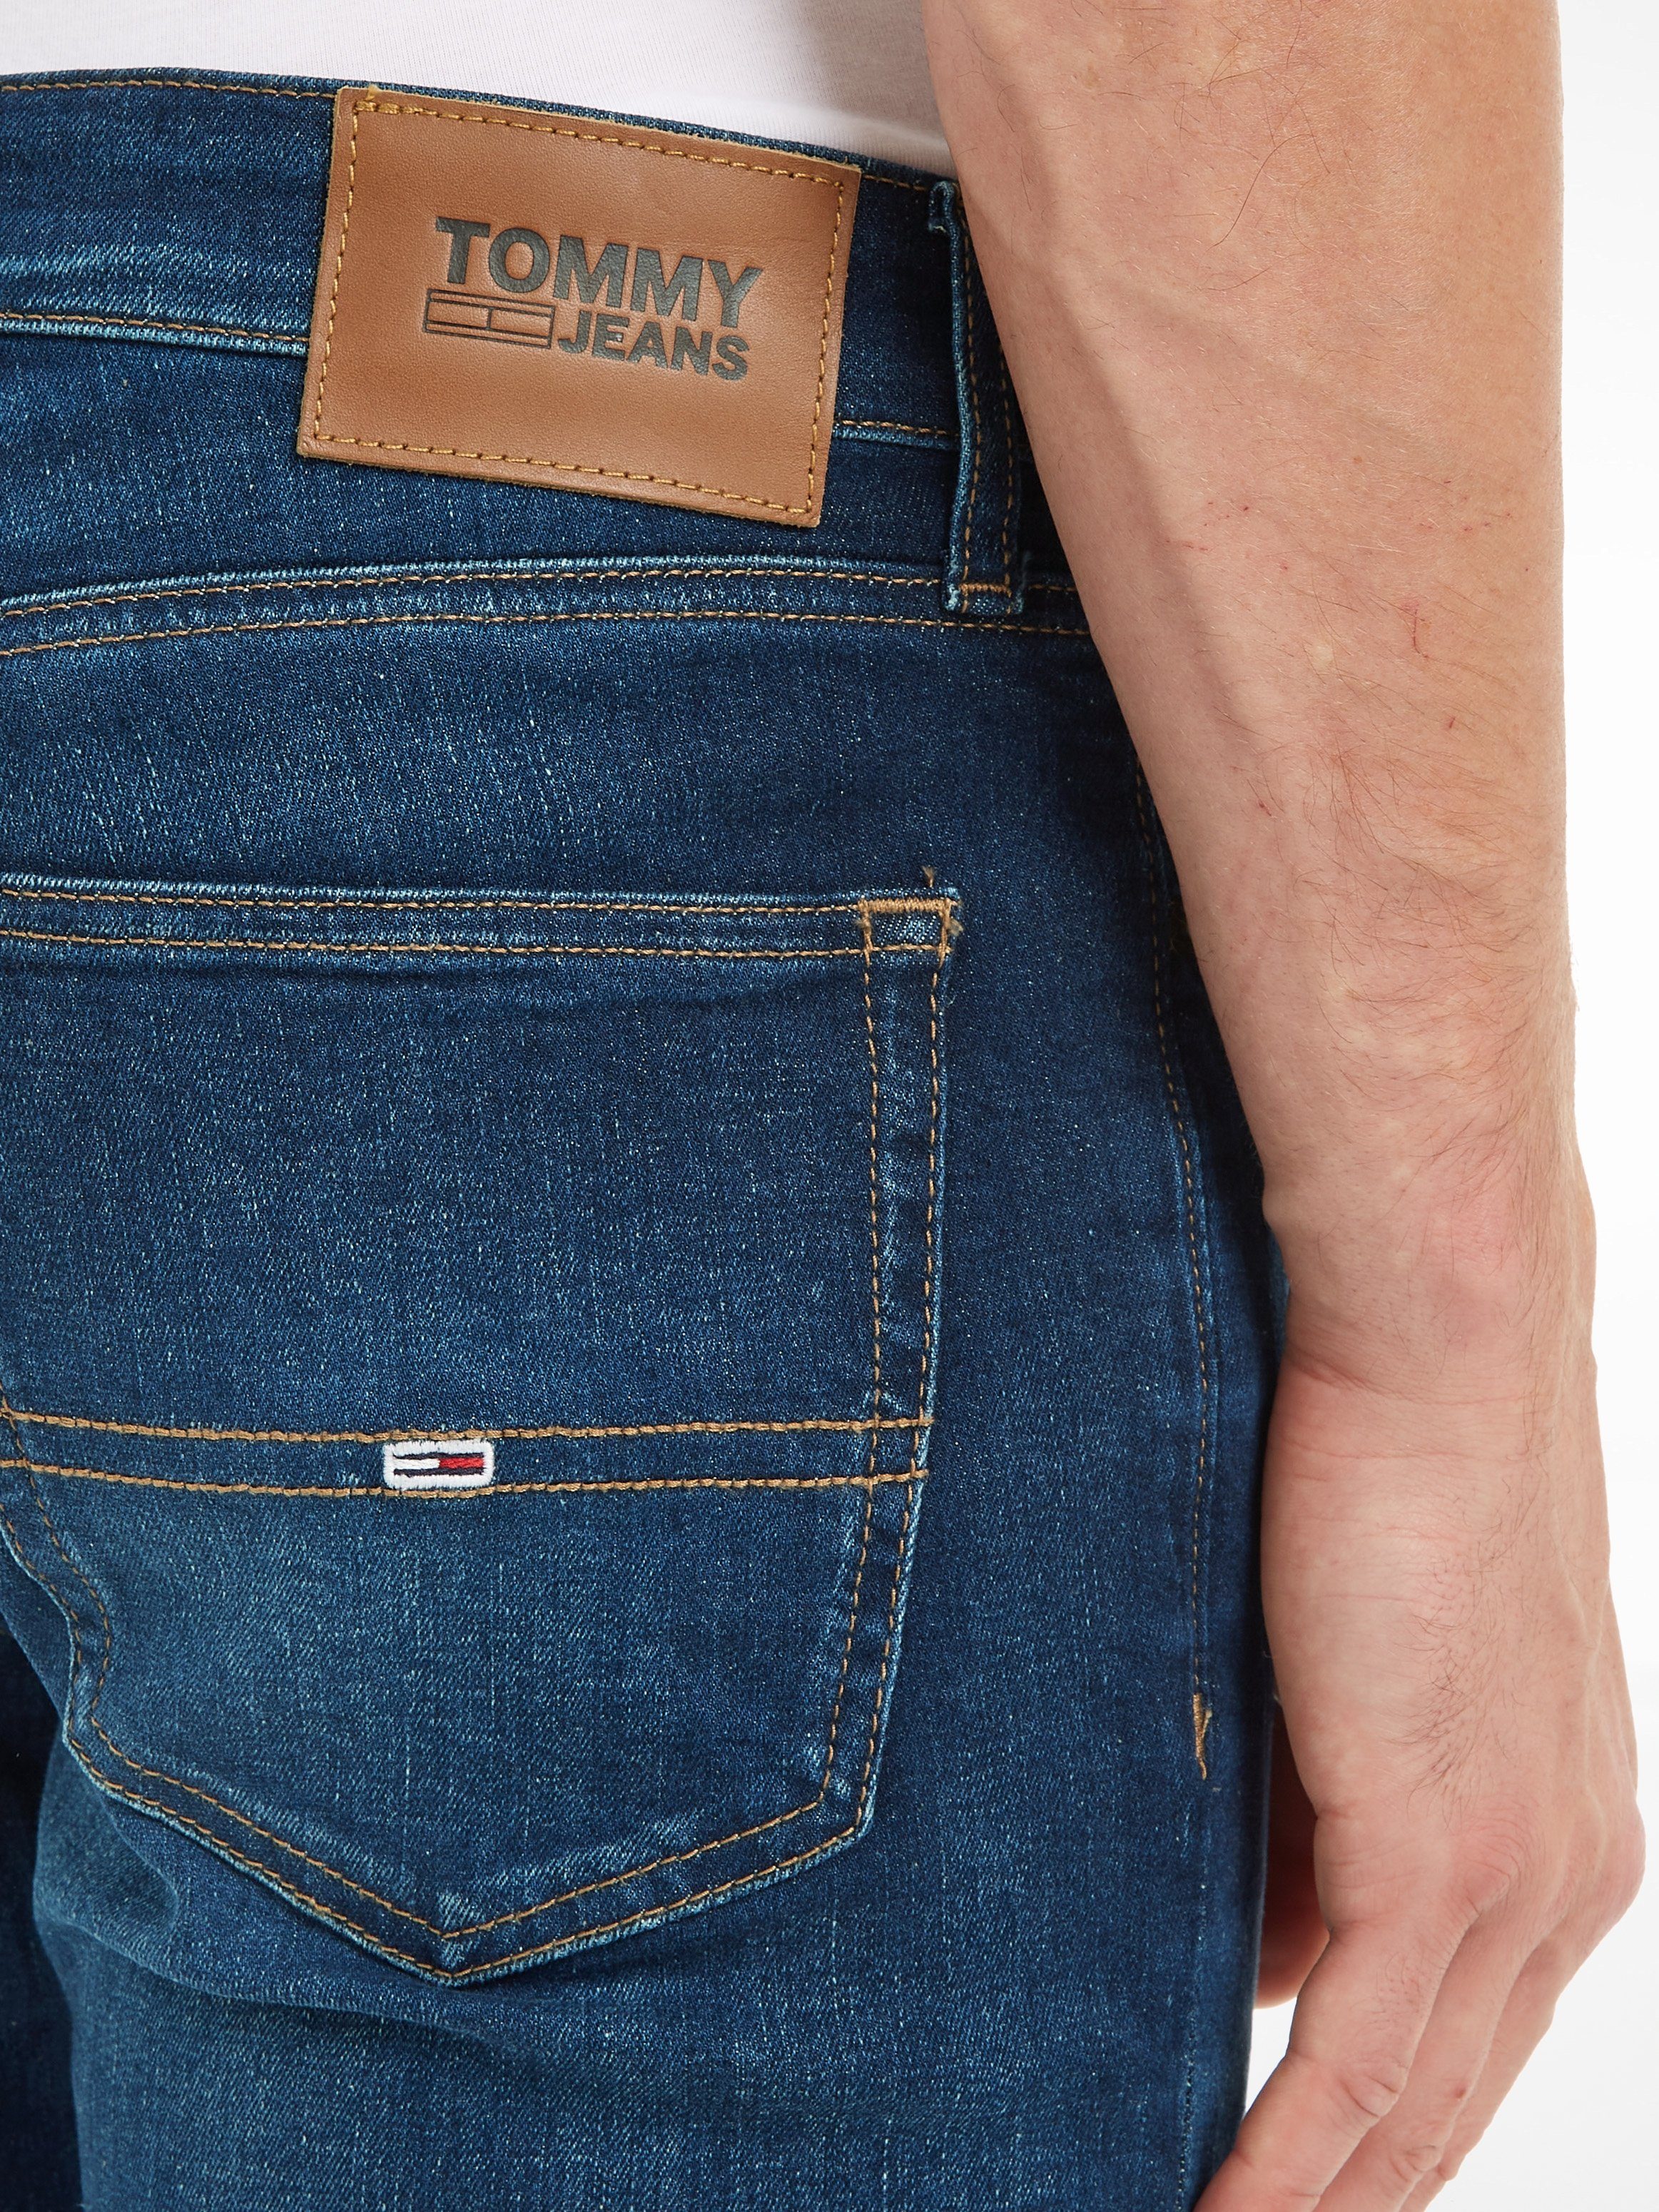 SLIM Jeans Slim-fit-Jeans Tommy SCANTON darkblue aspen